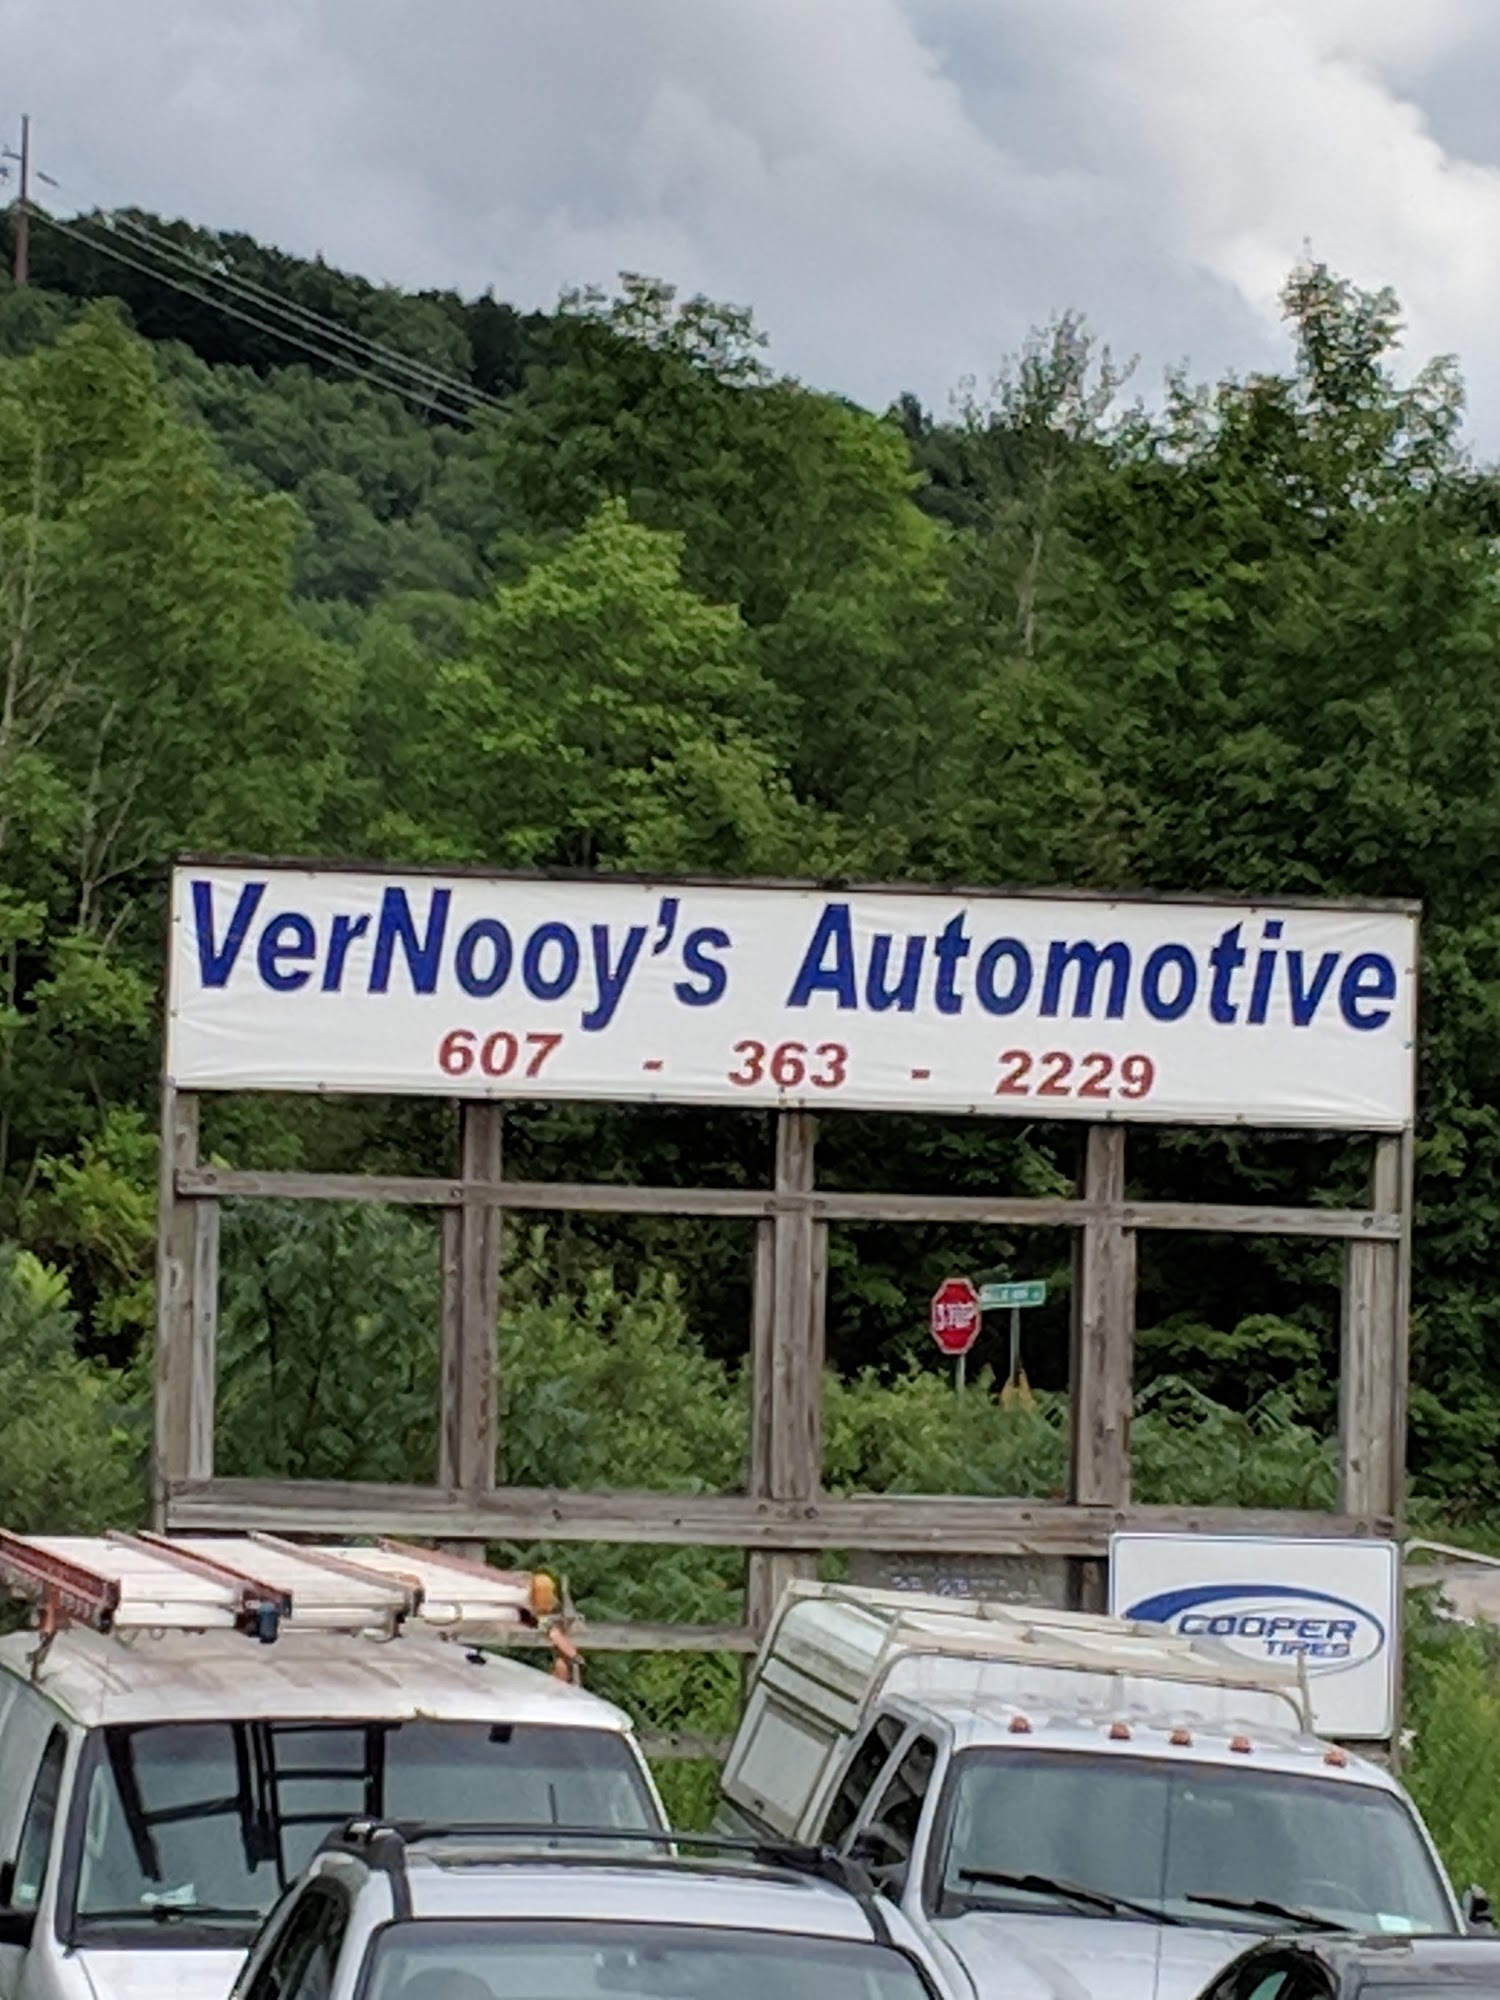 Vernooy's Automotive